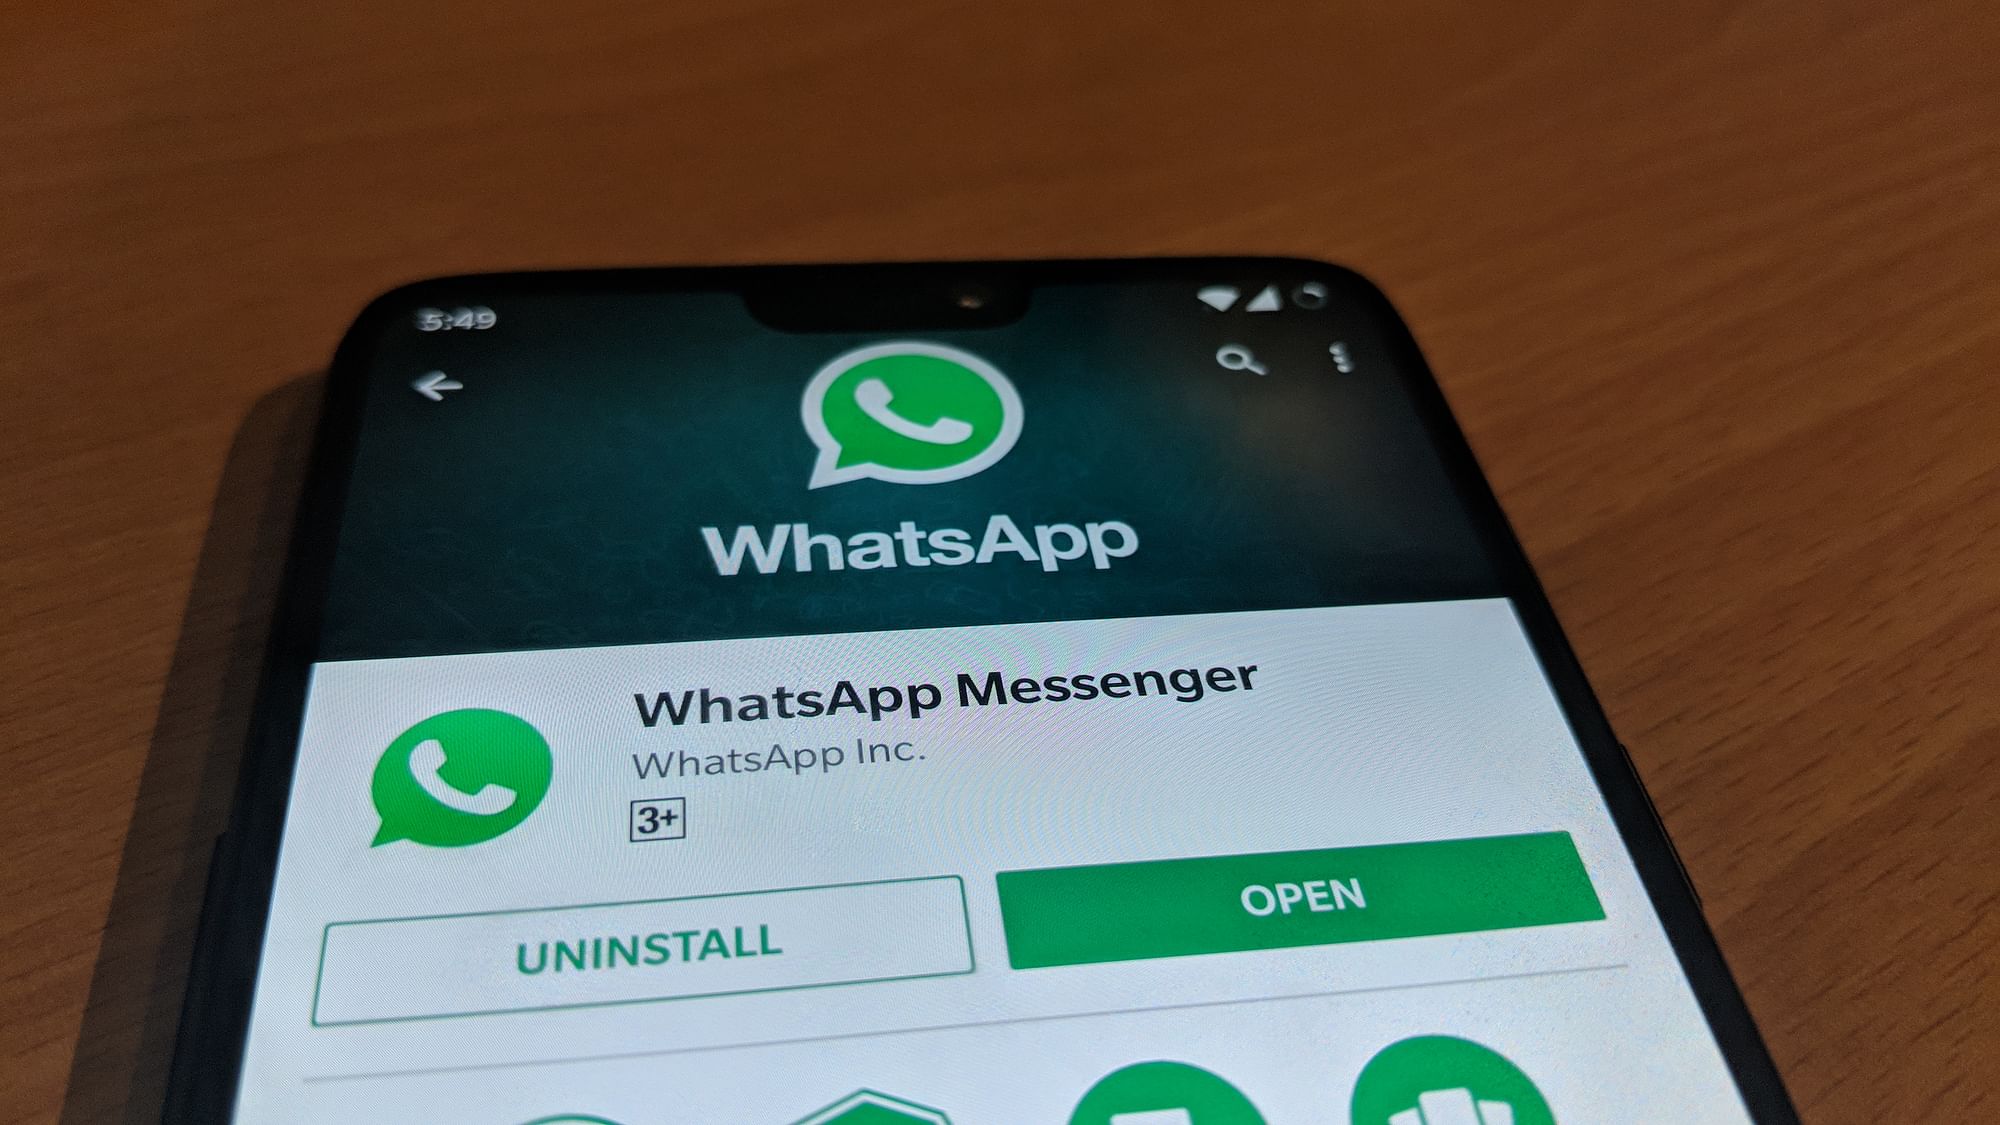 instal the new WhatsApp 2.2325.3